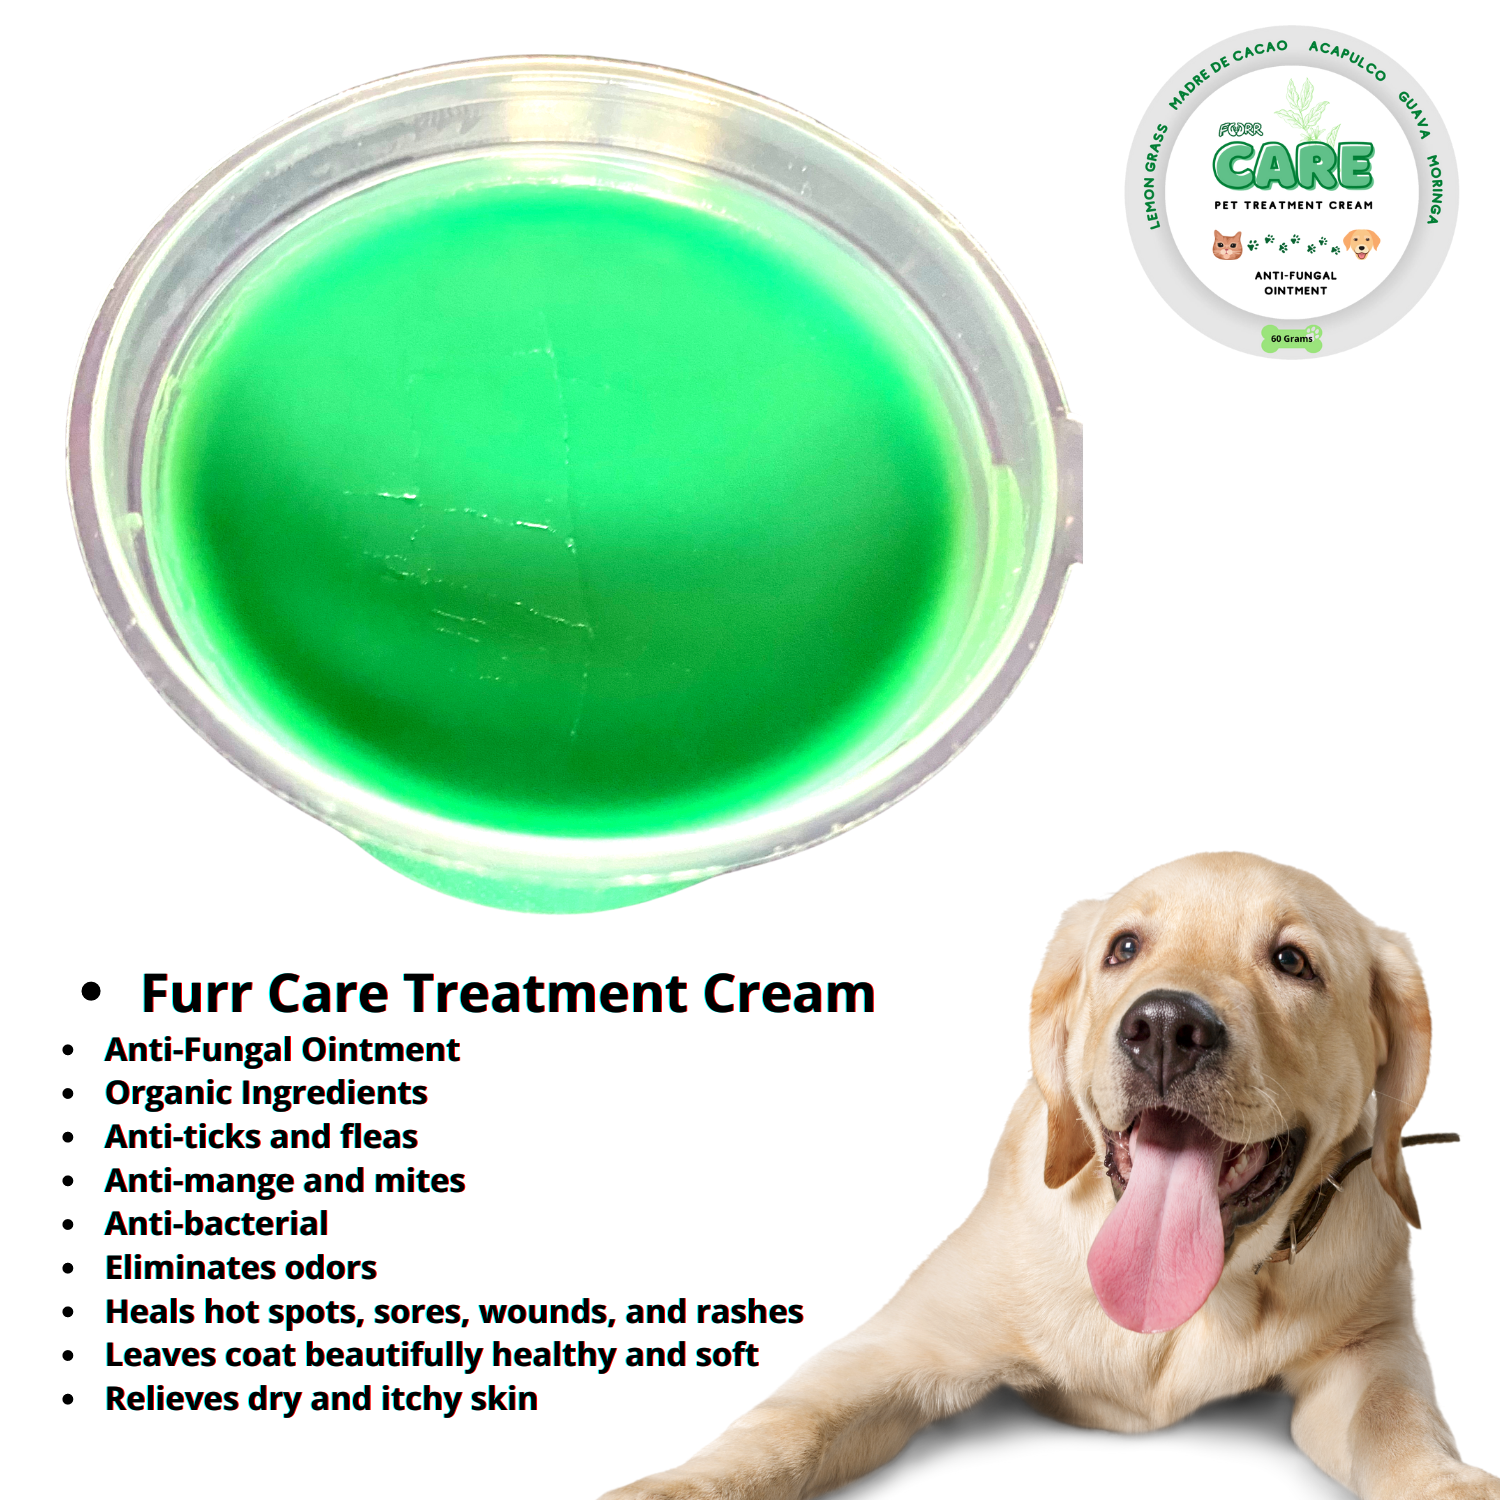 can i use antifungal cream on my dog